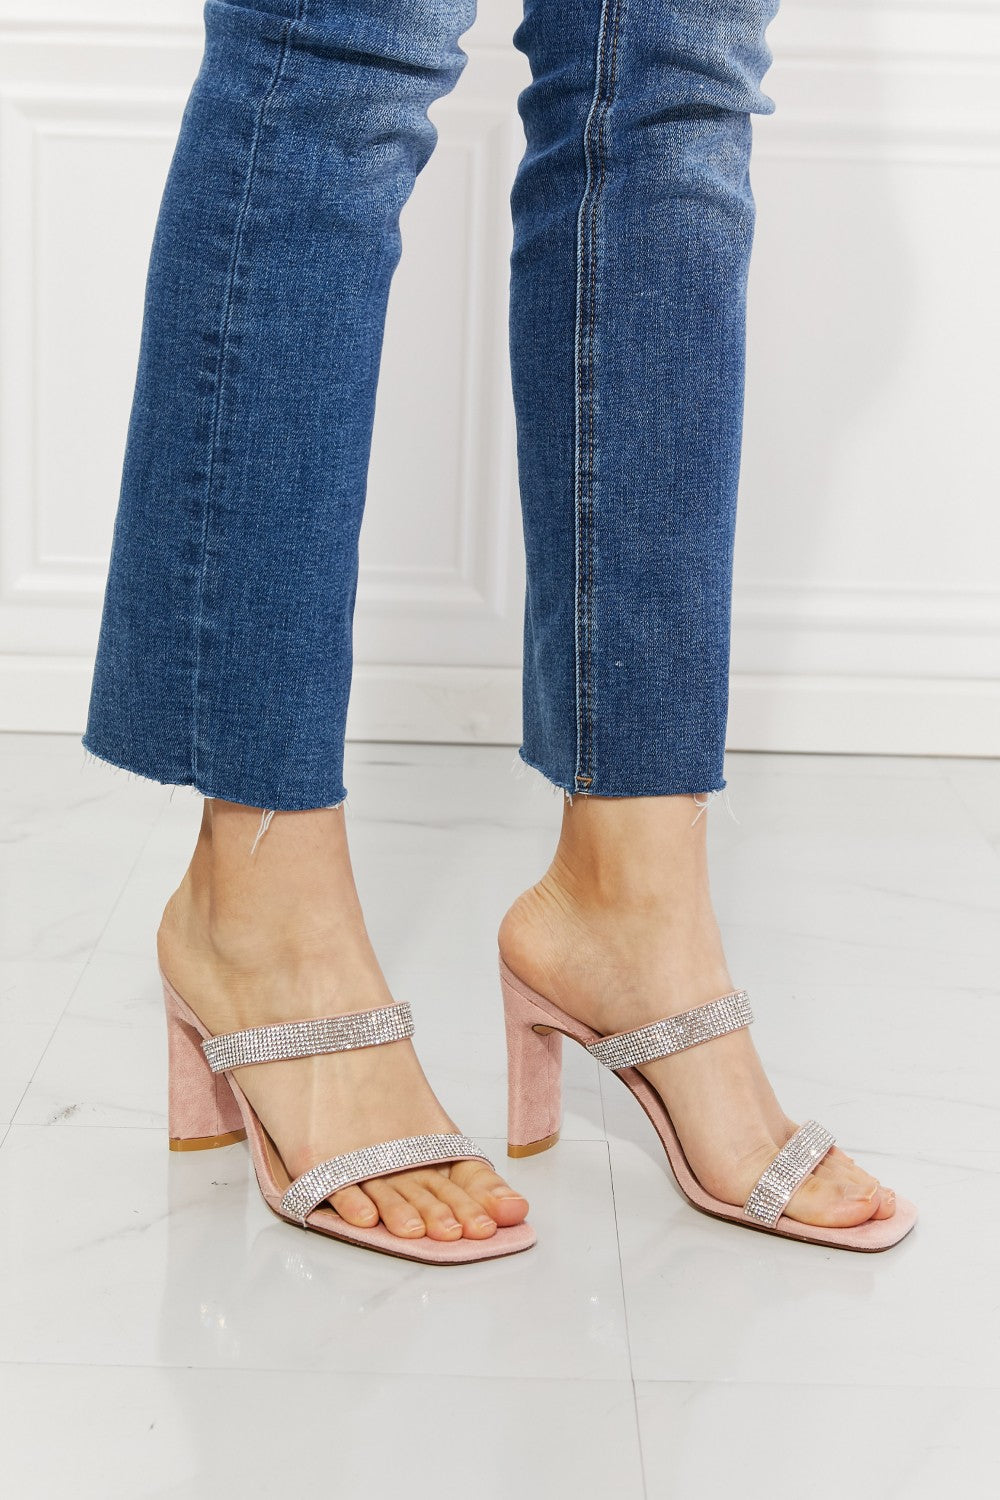 Leave a Little Sparkle Rhinestone Pink Block Heel Sandals